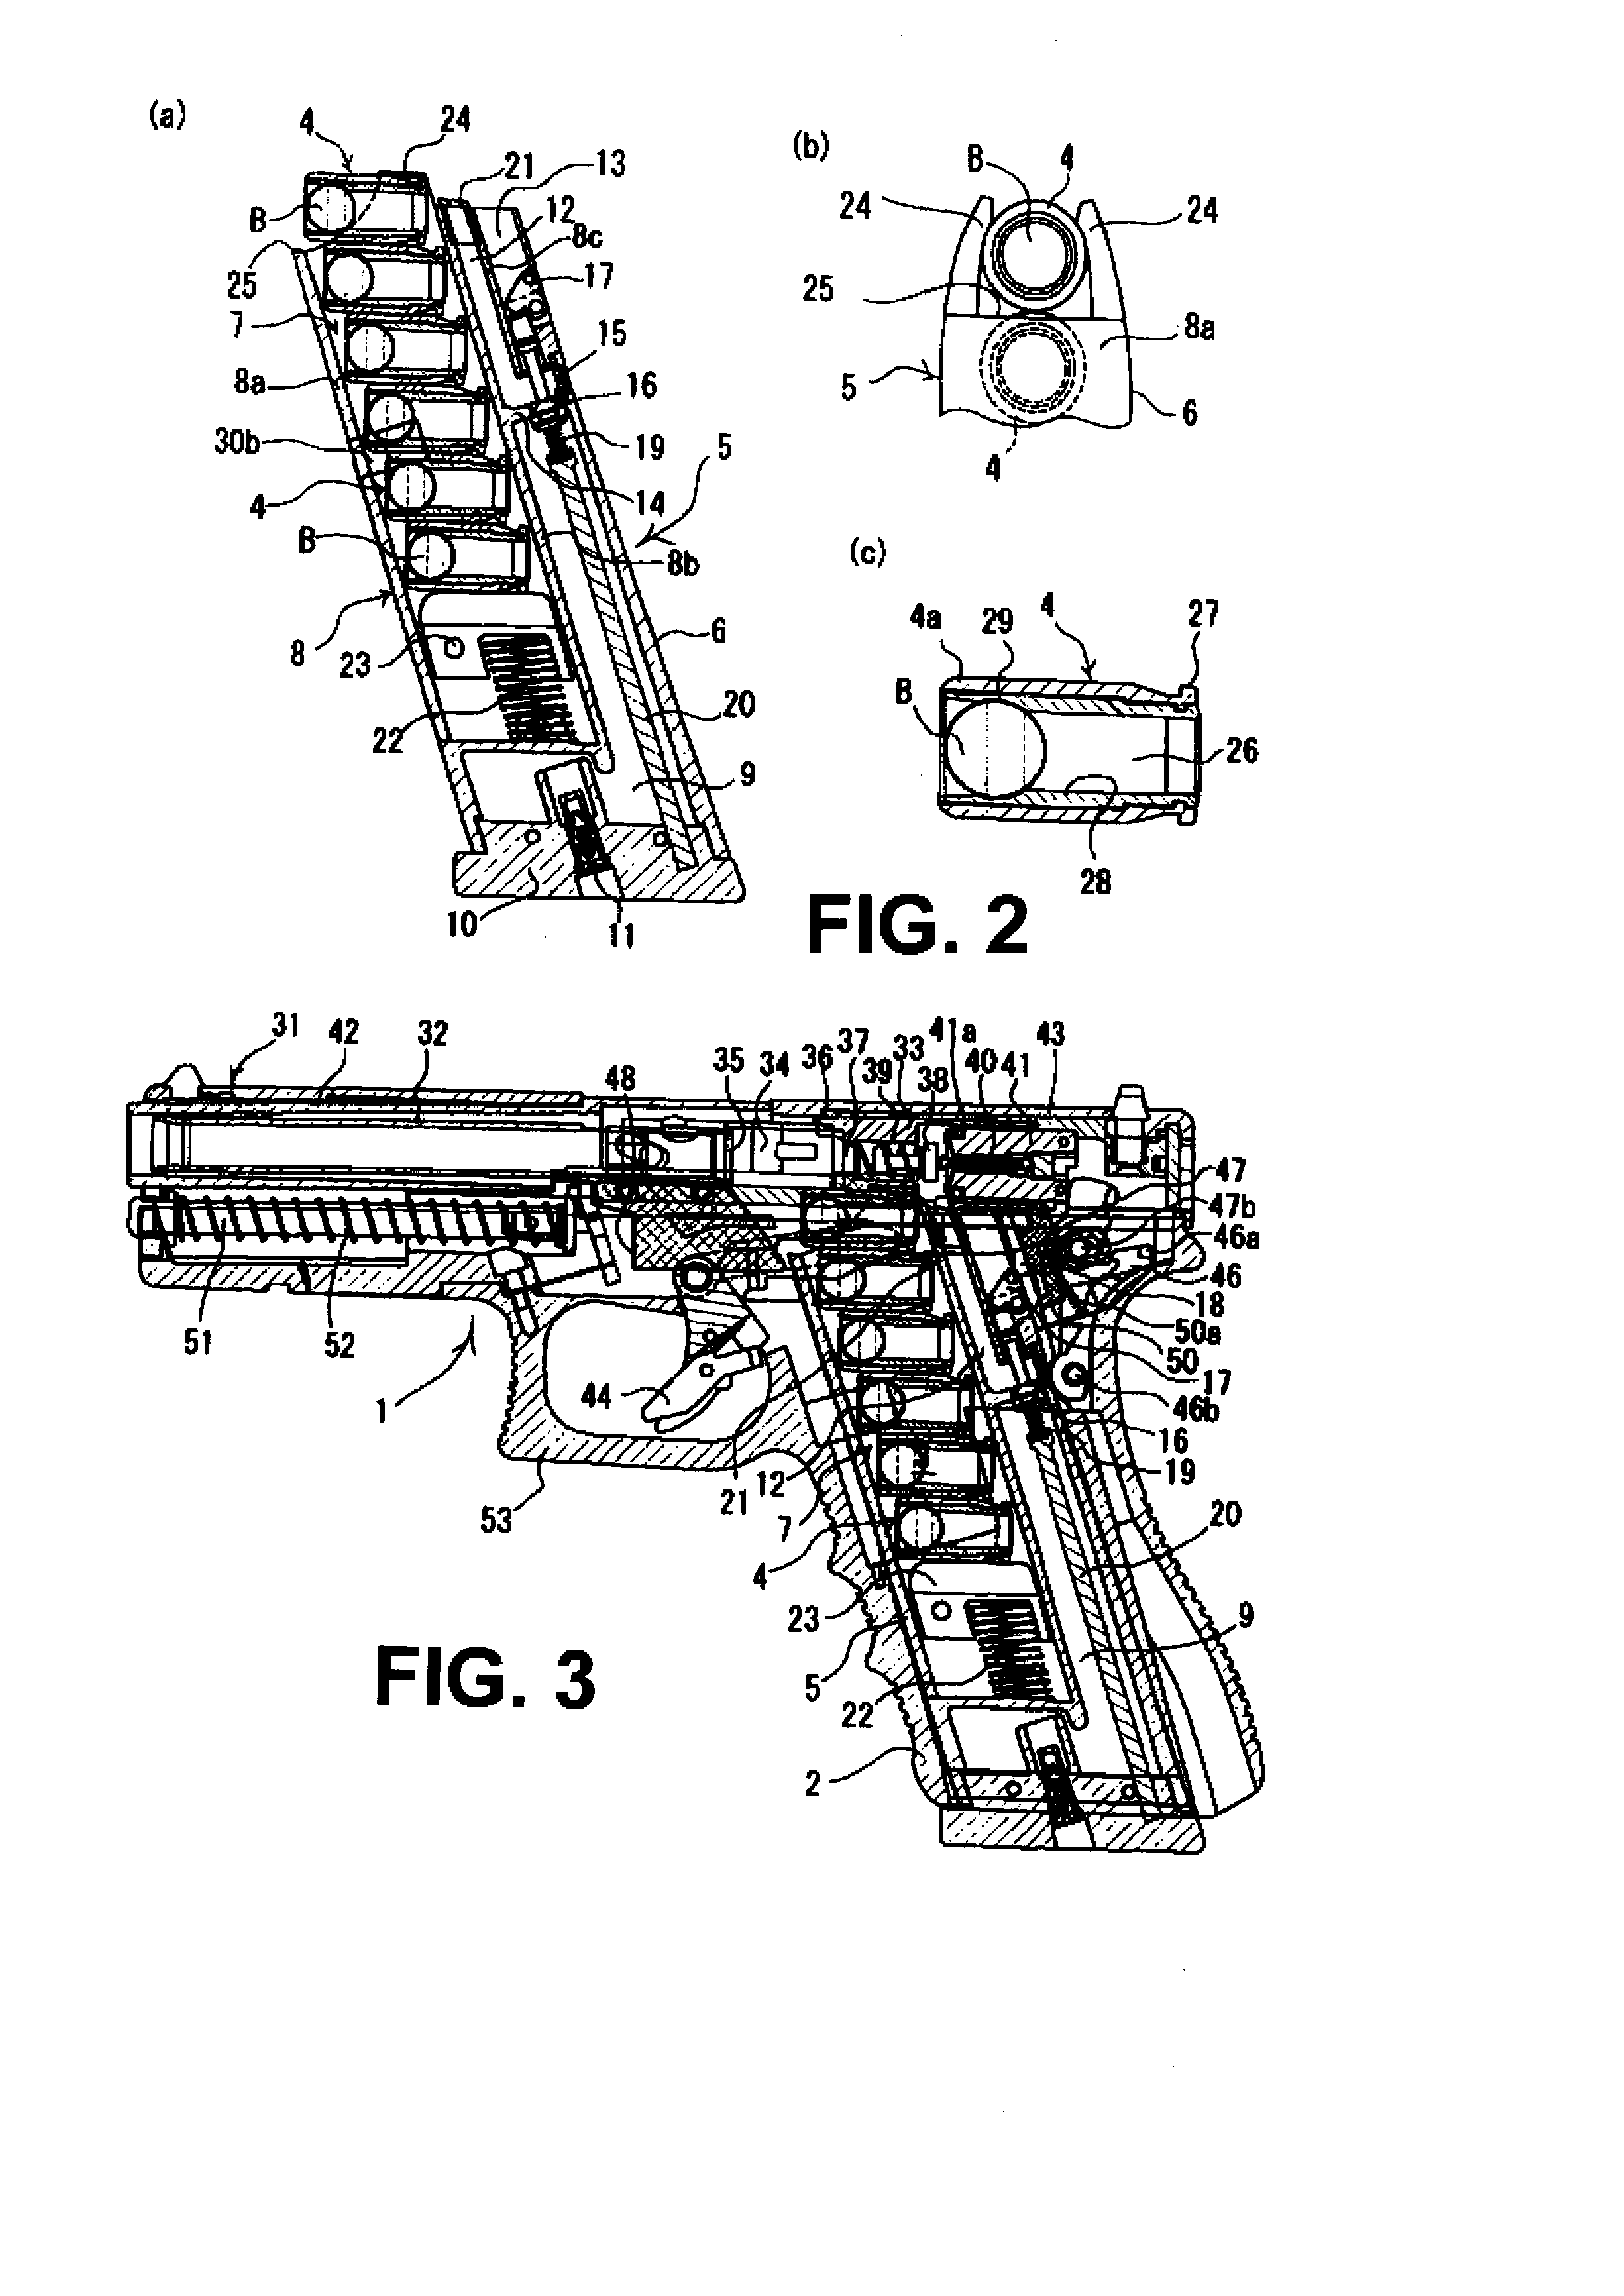 Cartridge-based air gun